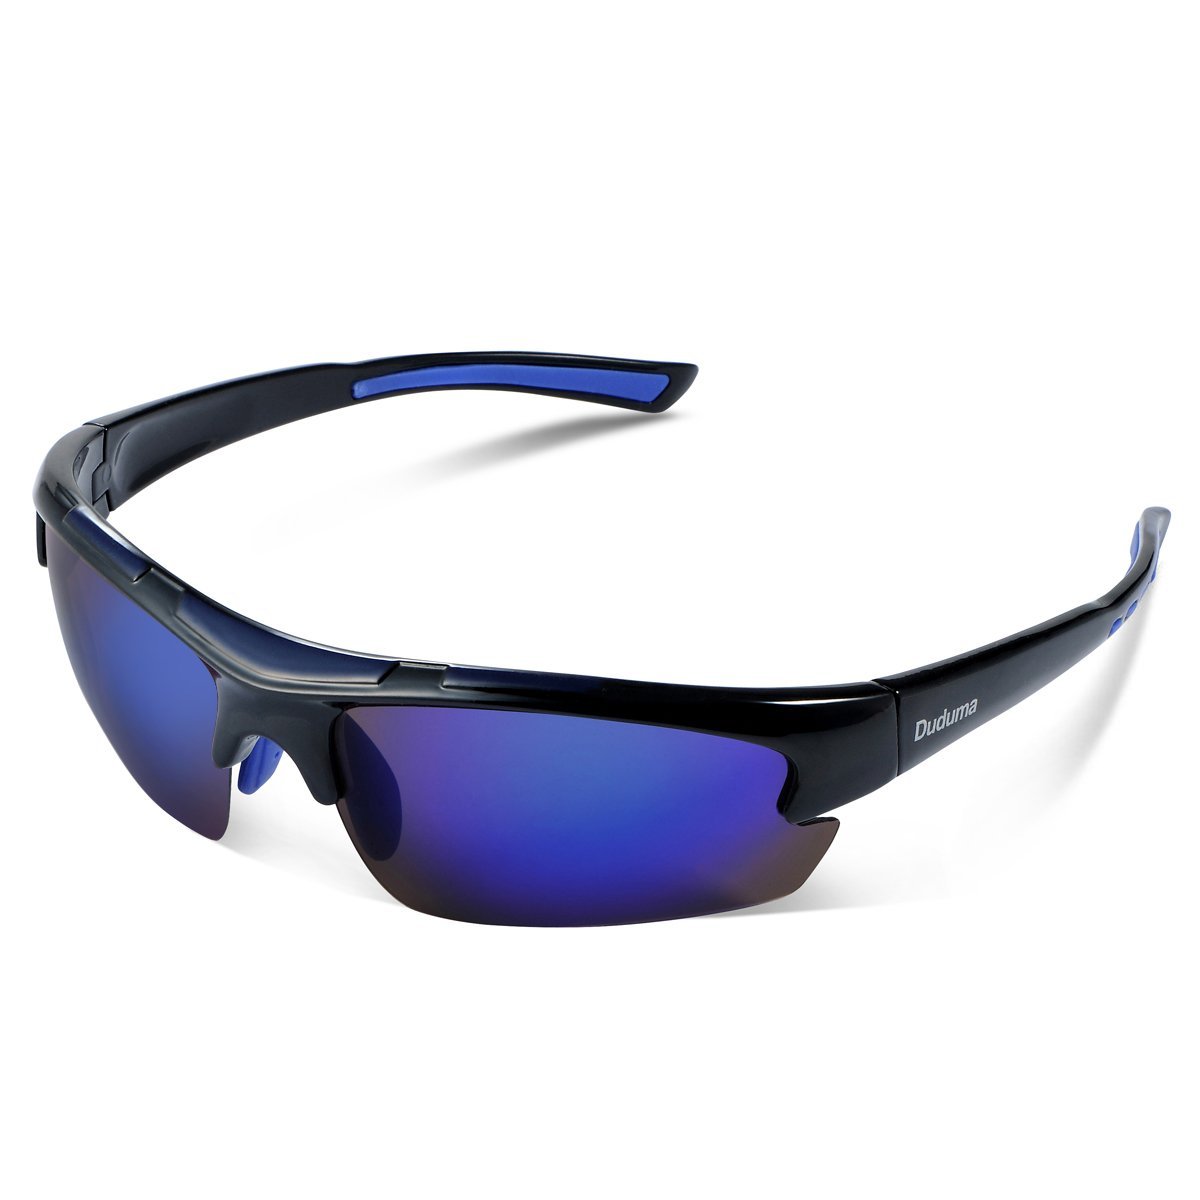 Duduma Polarized Designer Fashion Sports Sunglasses for Baseball Cycling Fishing Golf Tr62 Superlight Frame Black/Blue - image 1 of 6